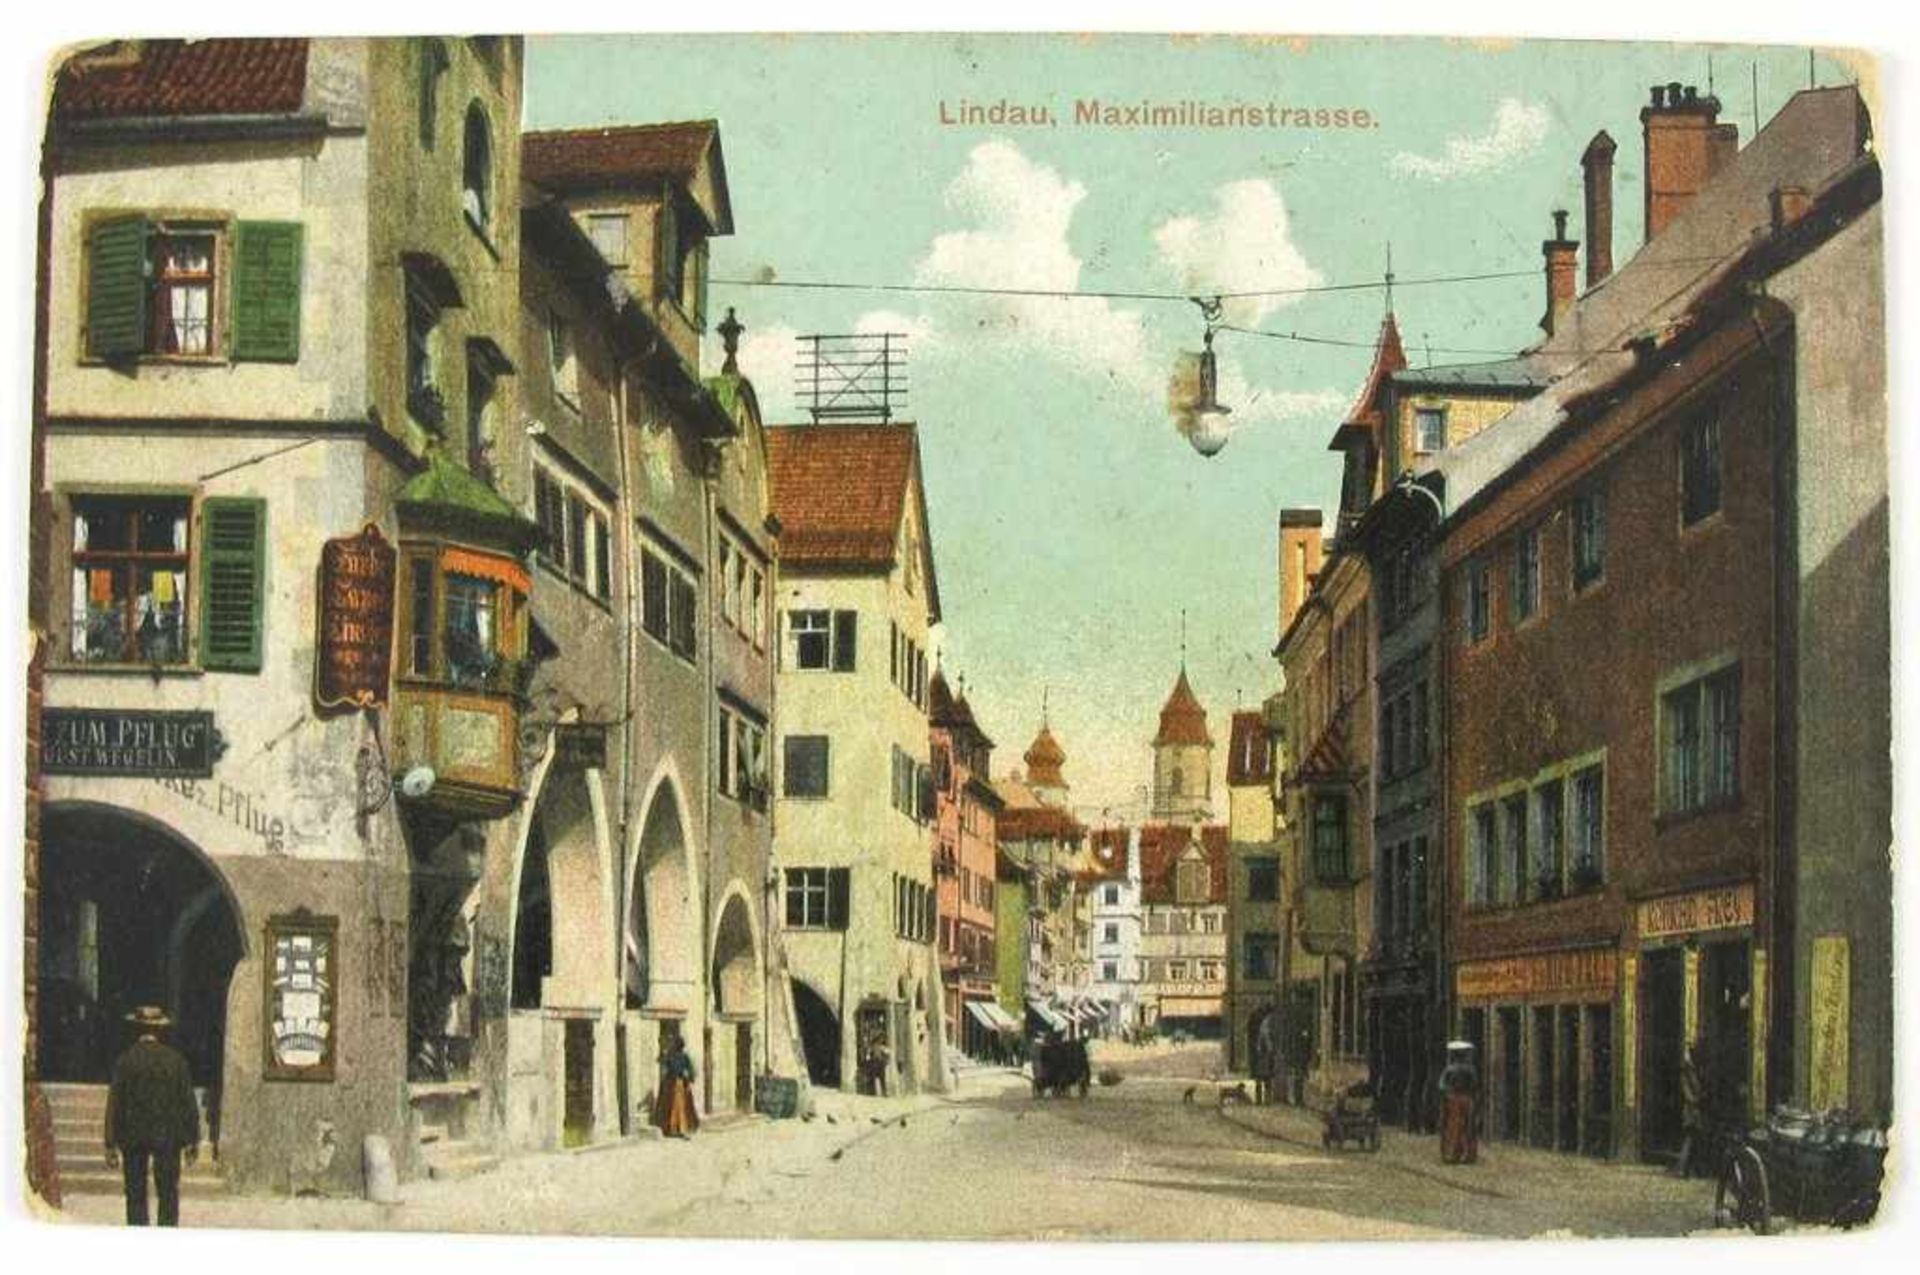 Postkarte Lindau. "Maximilianstrasse". Gelaufen 1907- - -27.00 % buyer's premium on the hammer